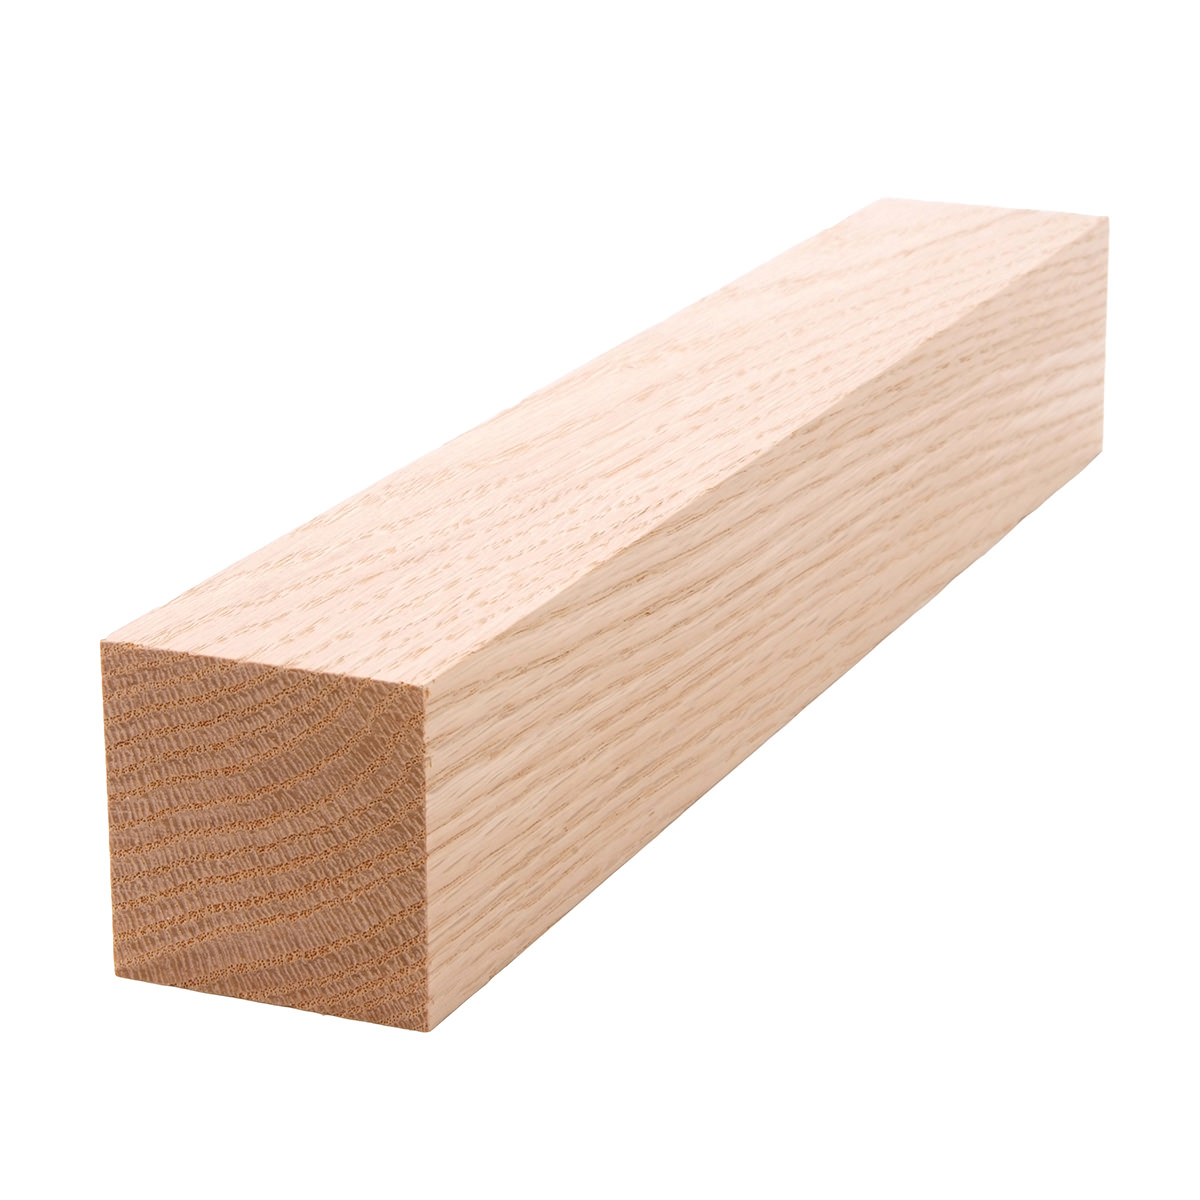 2x2 (13/4" x 13/4") Red Oak S4S Lumber & Square Stock